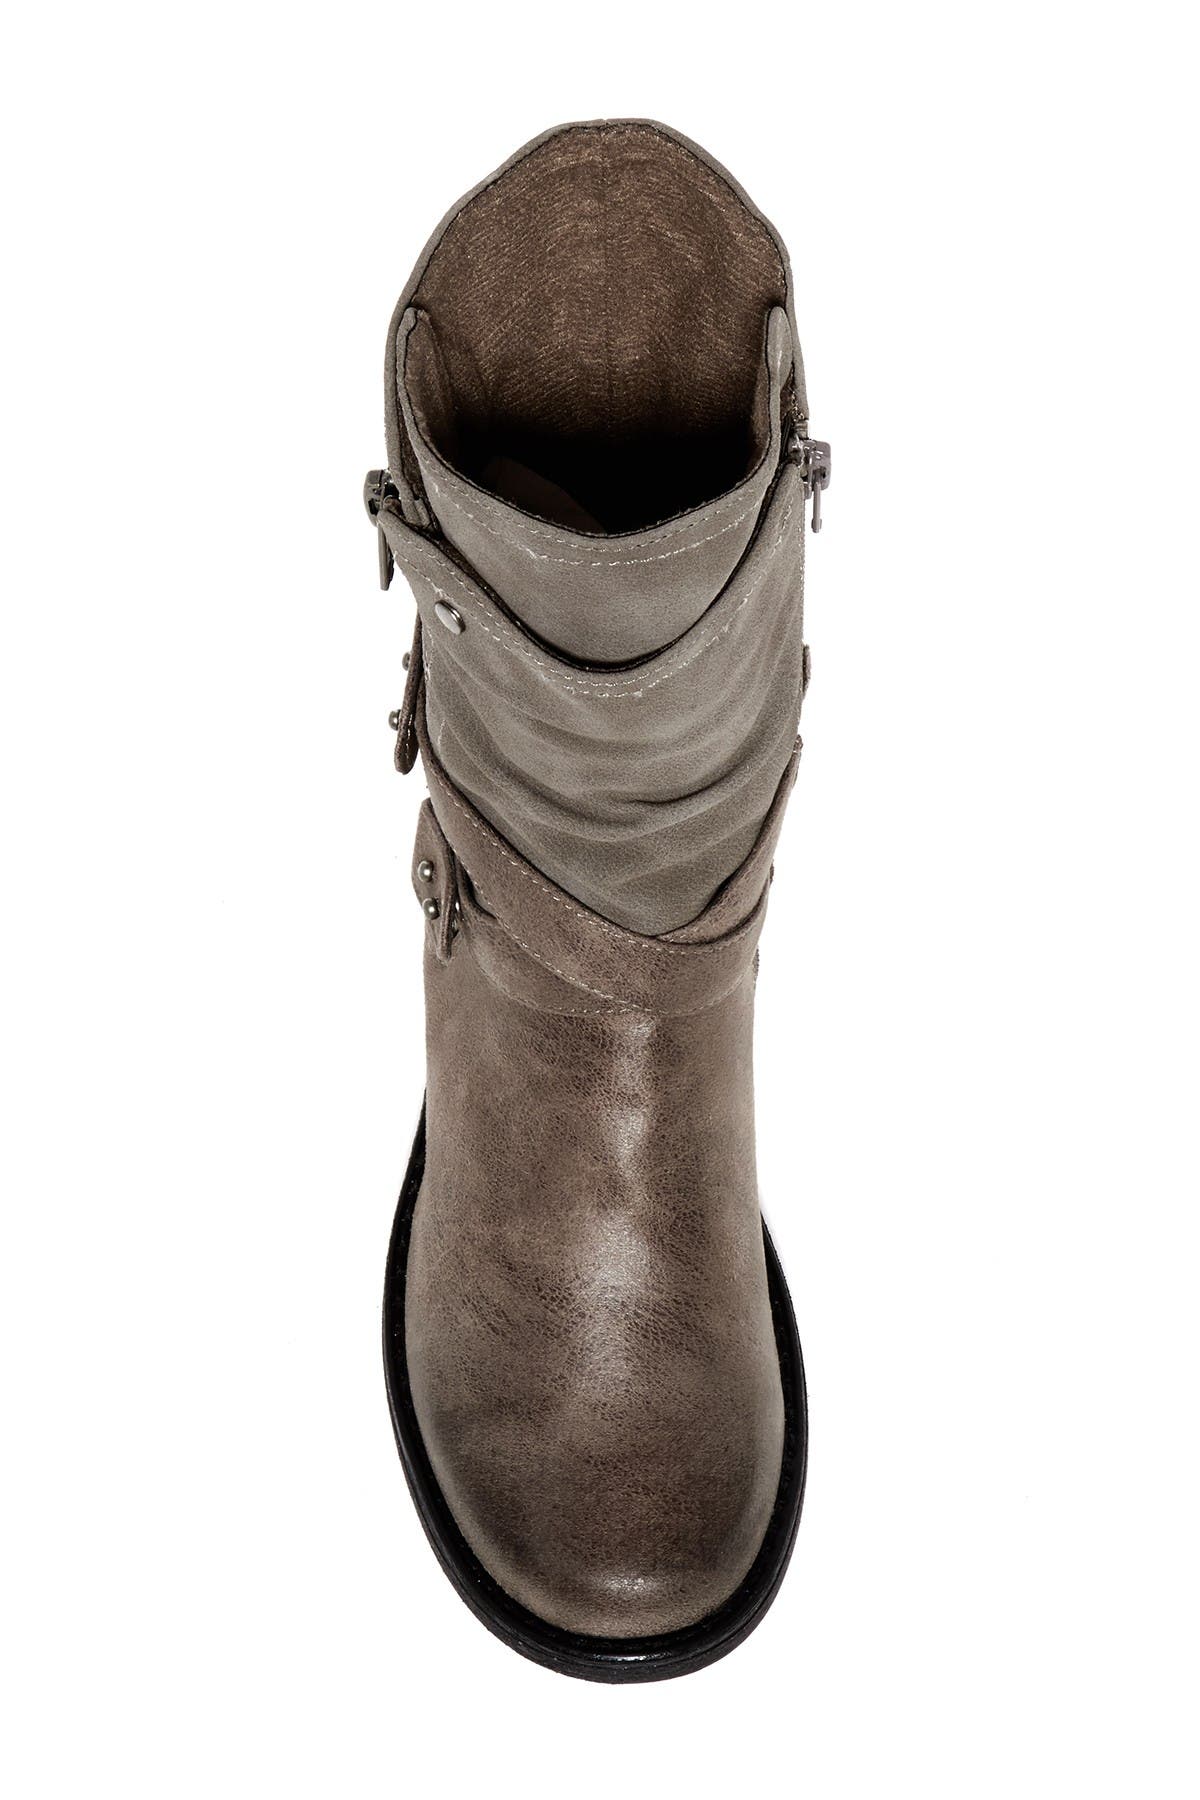 carlos by carlos santana sawyer boots